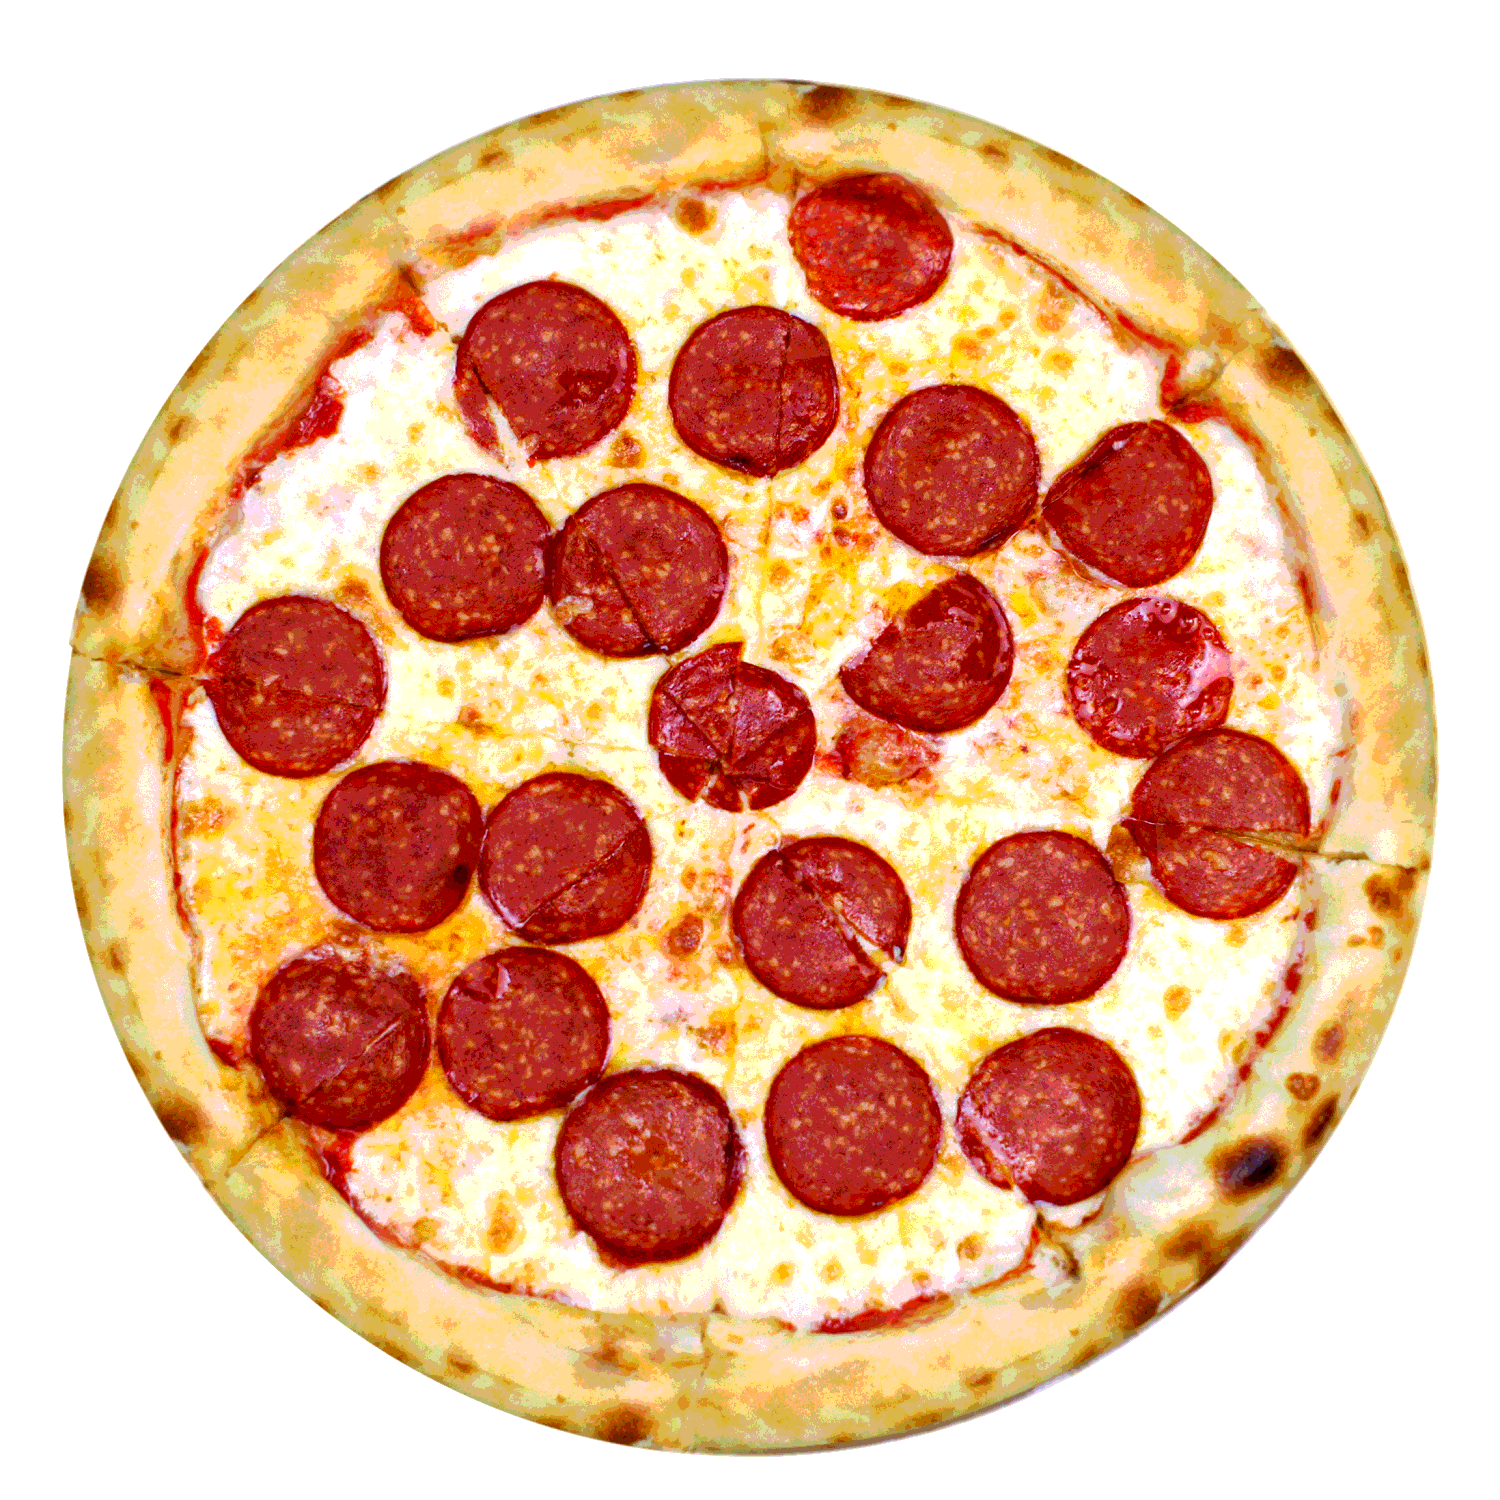 что означает пепперони в пицце фото 113